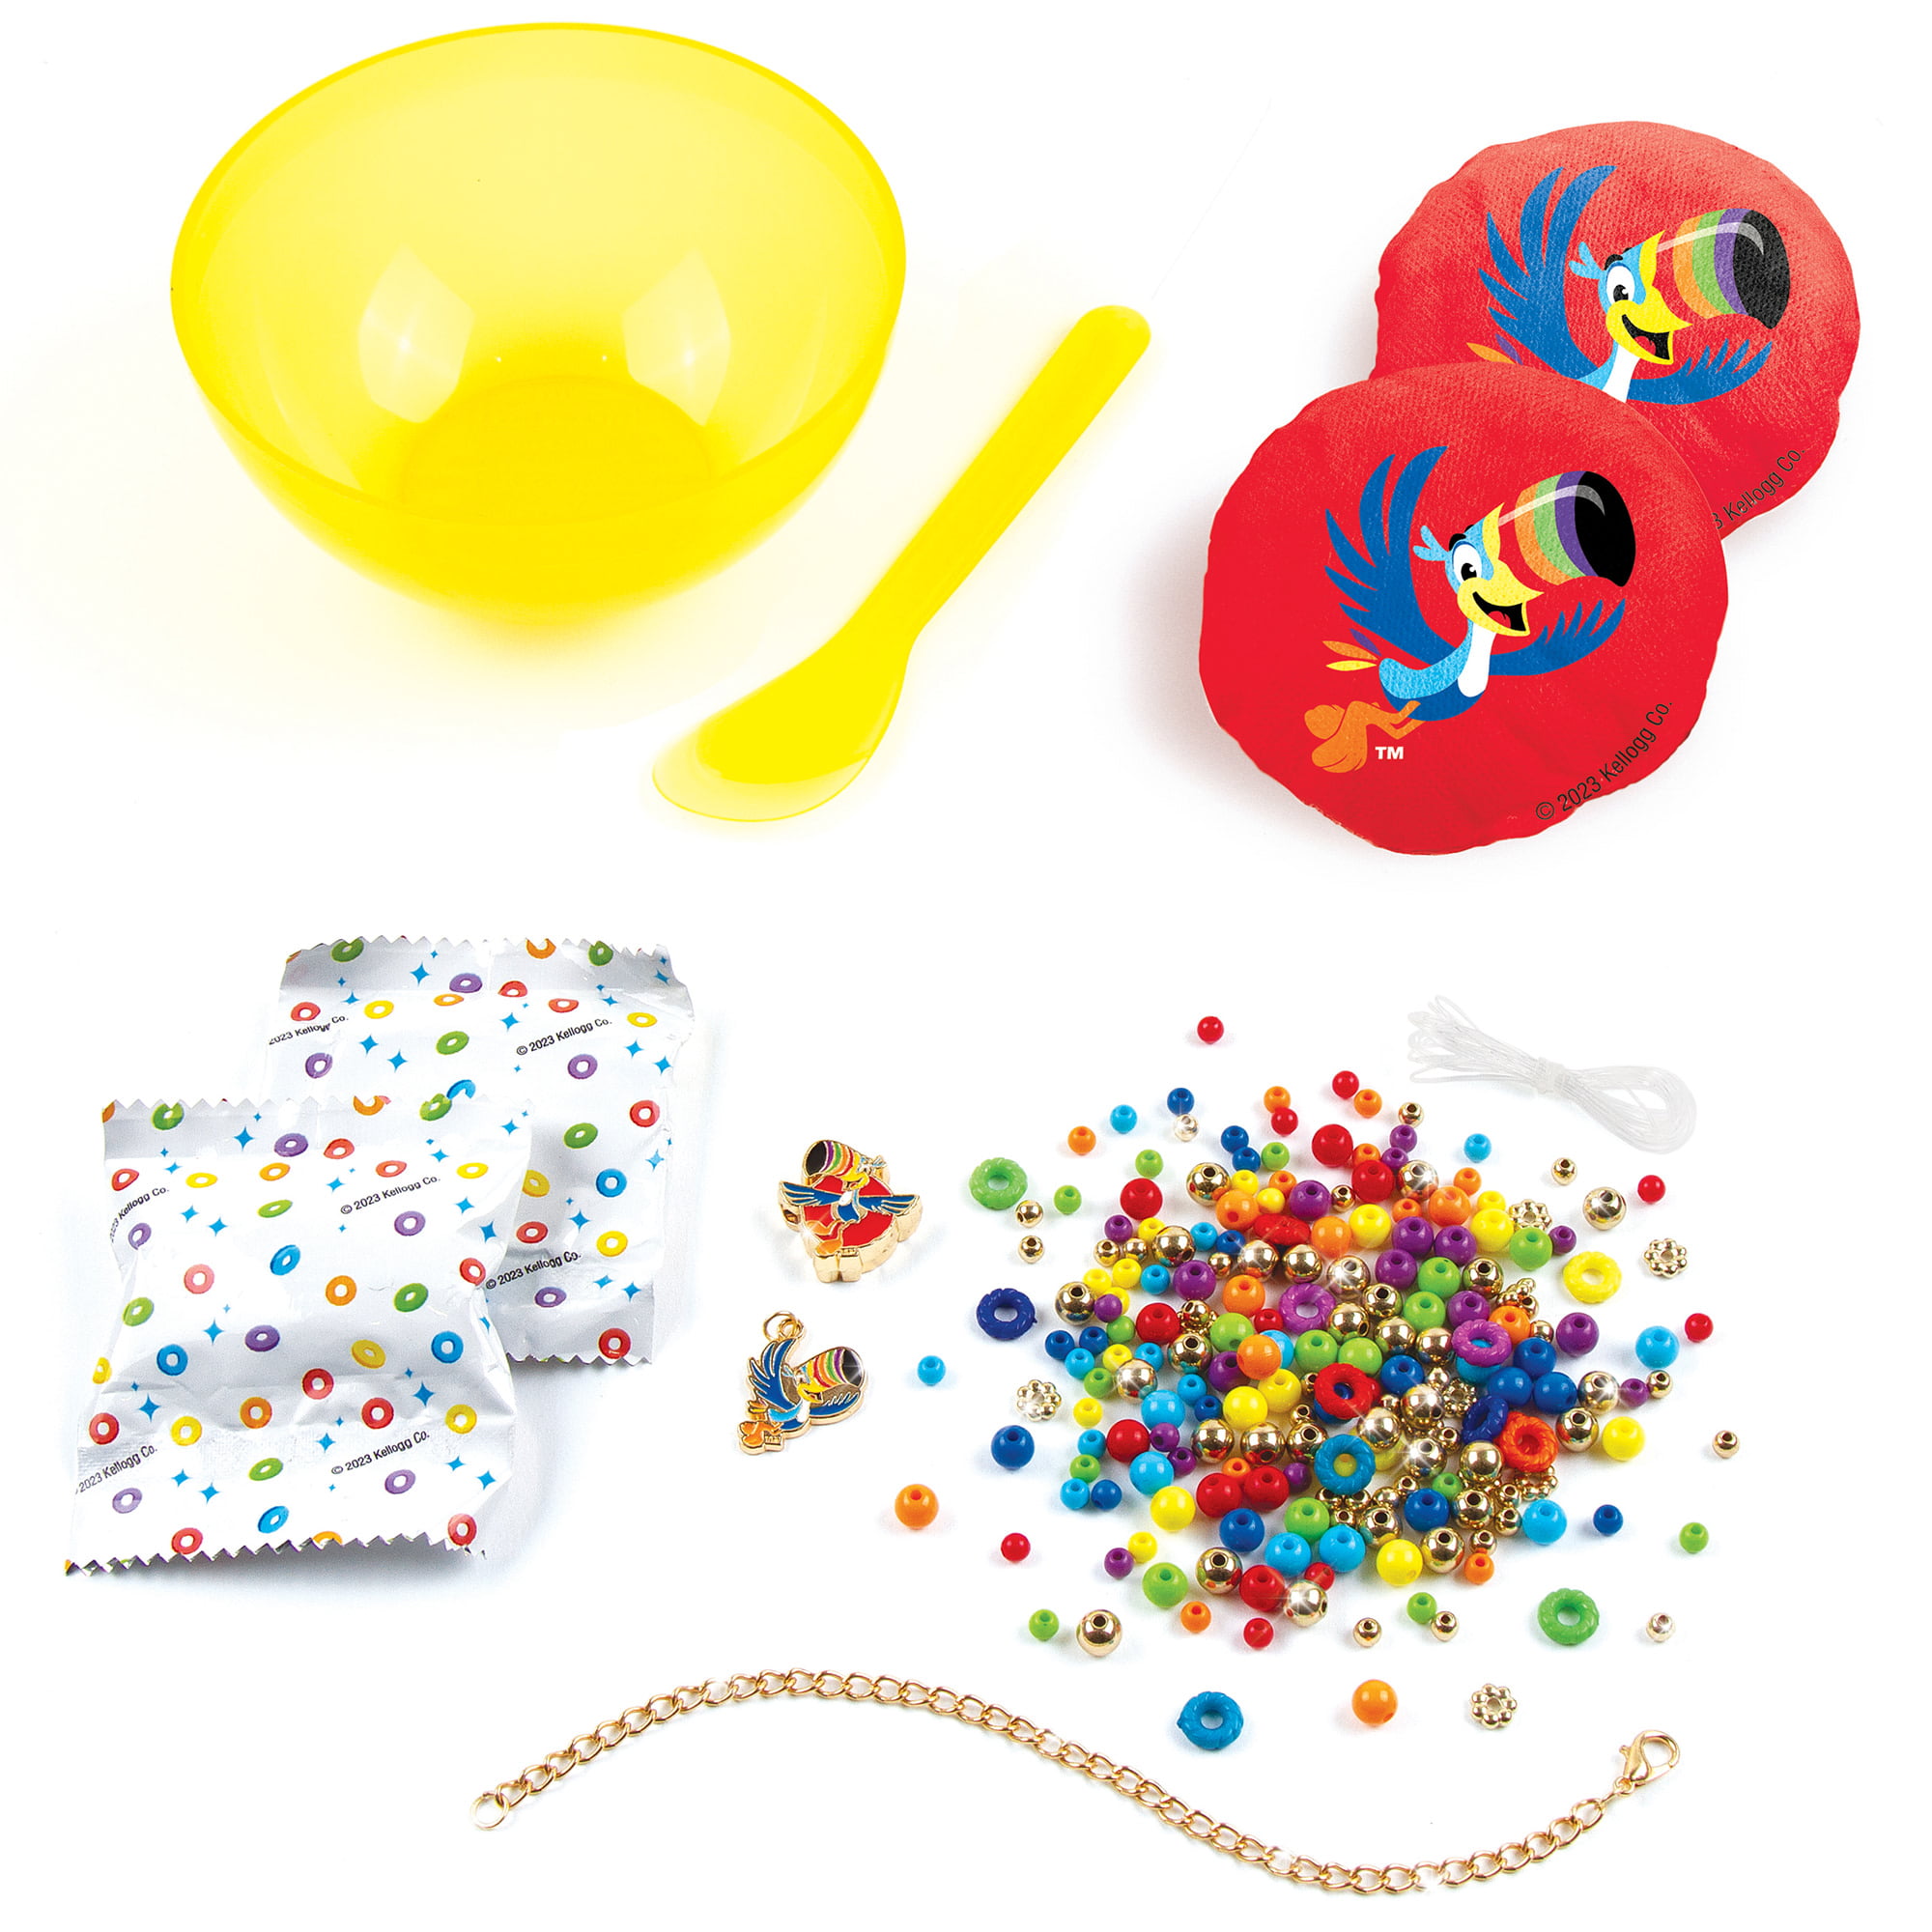 DIY Game Day Team Color Pom Poms · Kix Cereal